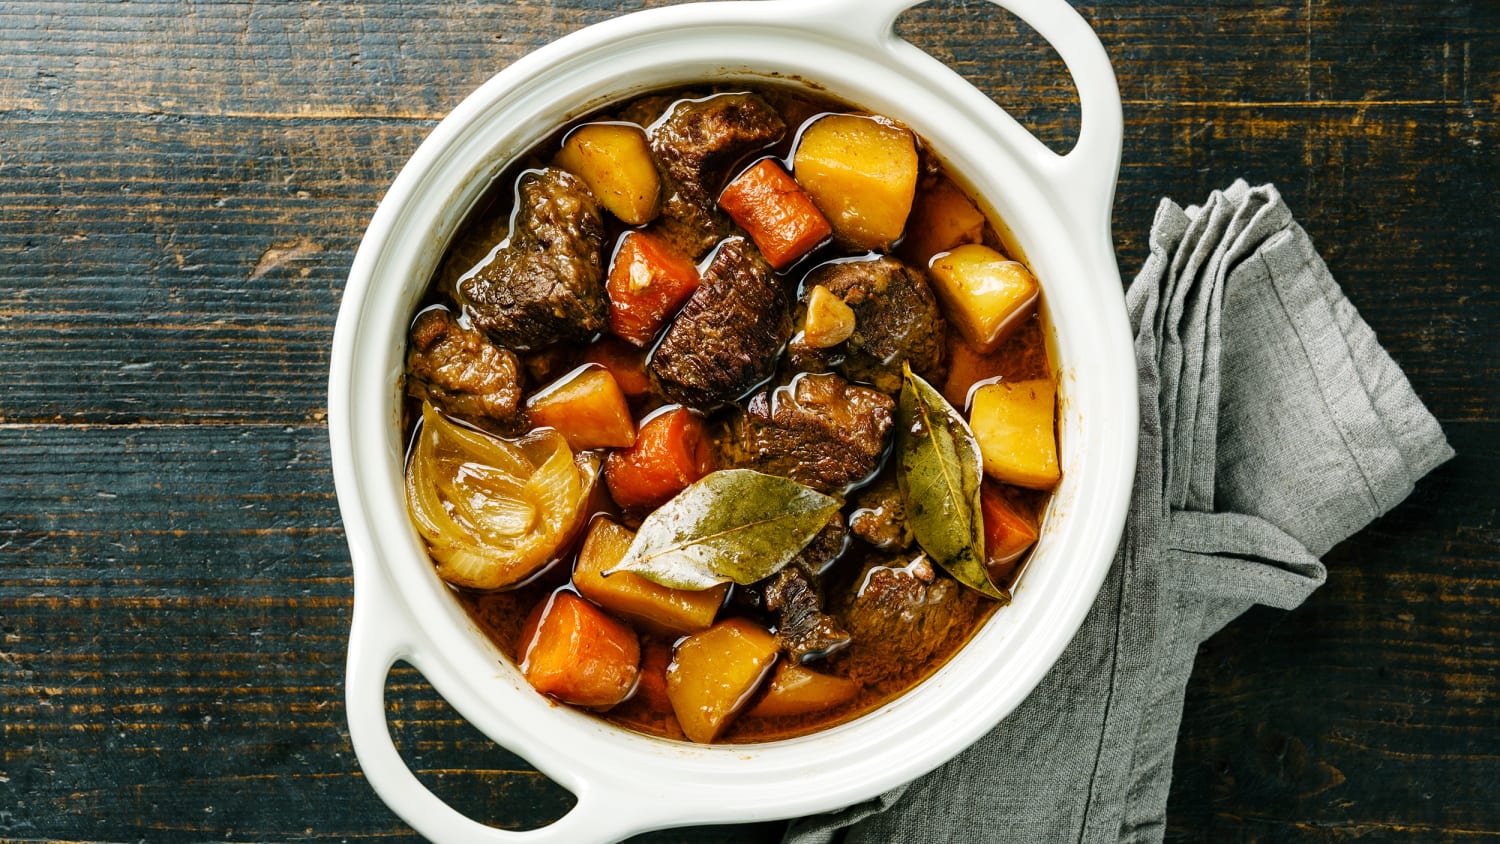 Scottish recipes: Beef stew, rhubarb crumble &amp; shortbread - TODAY.com